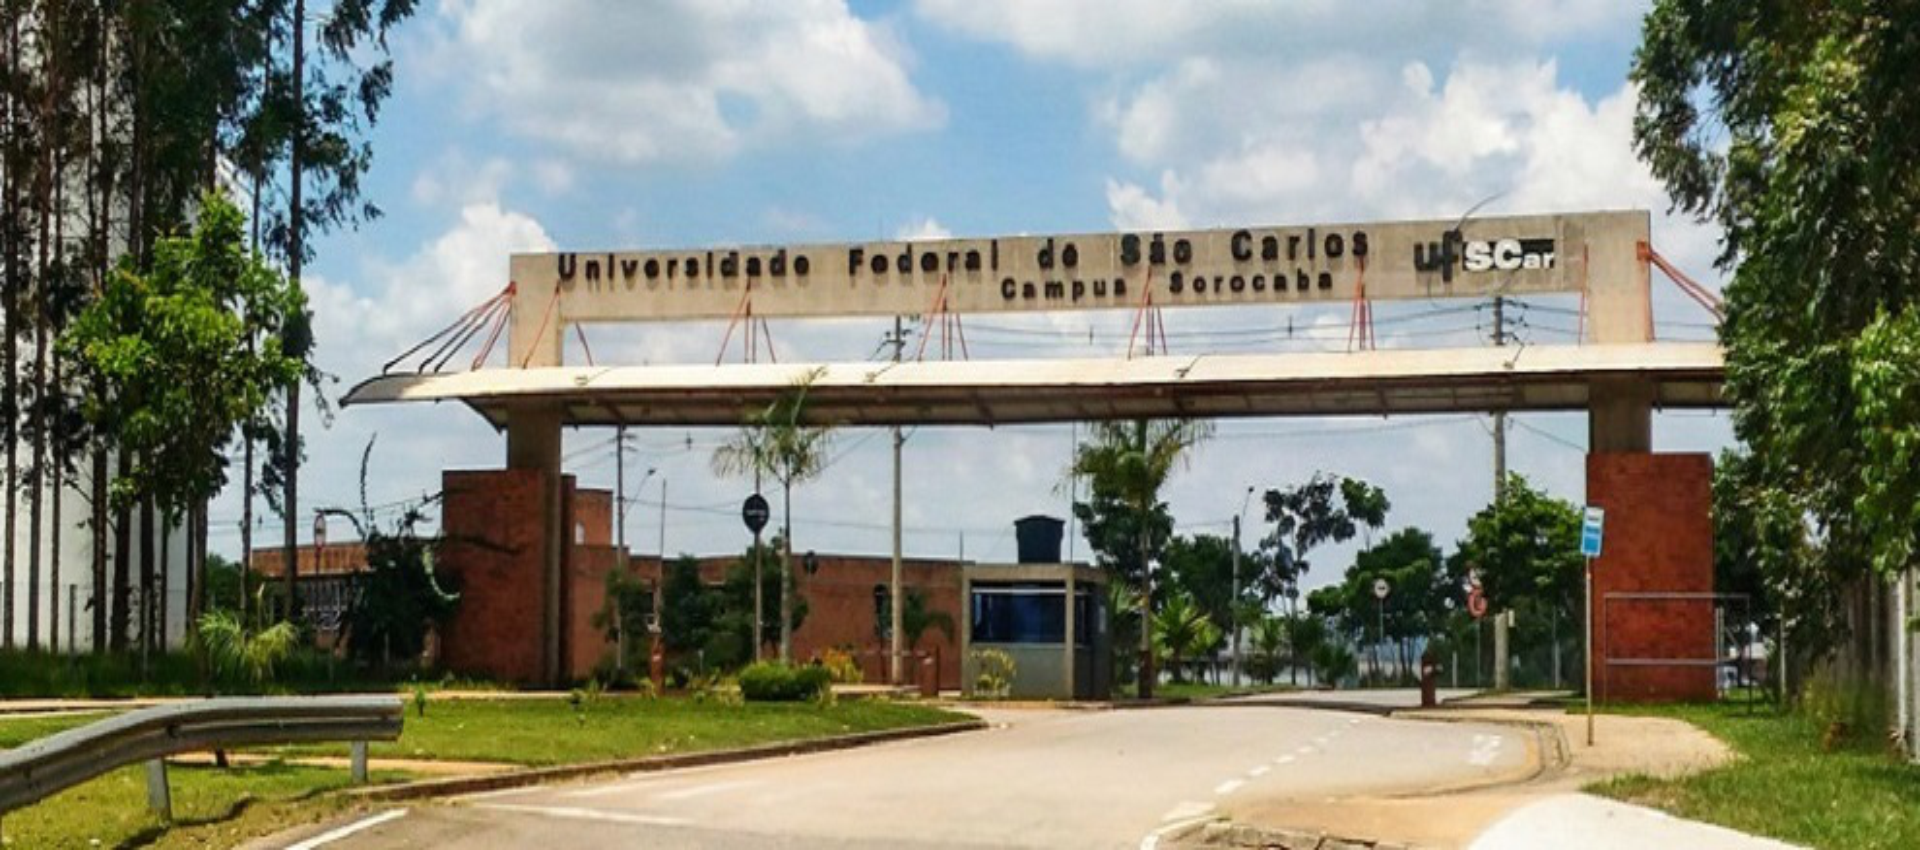 UFSCar campus Sorocaba